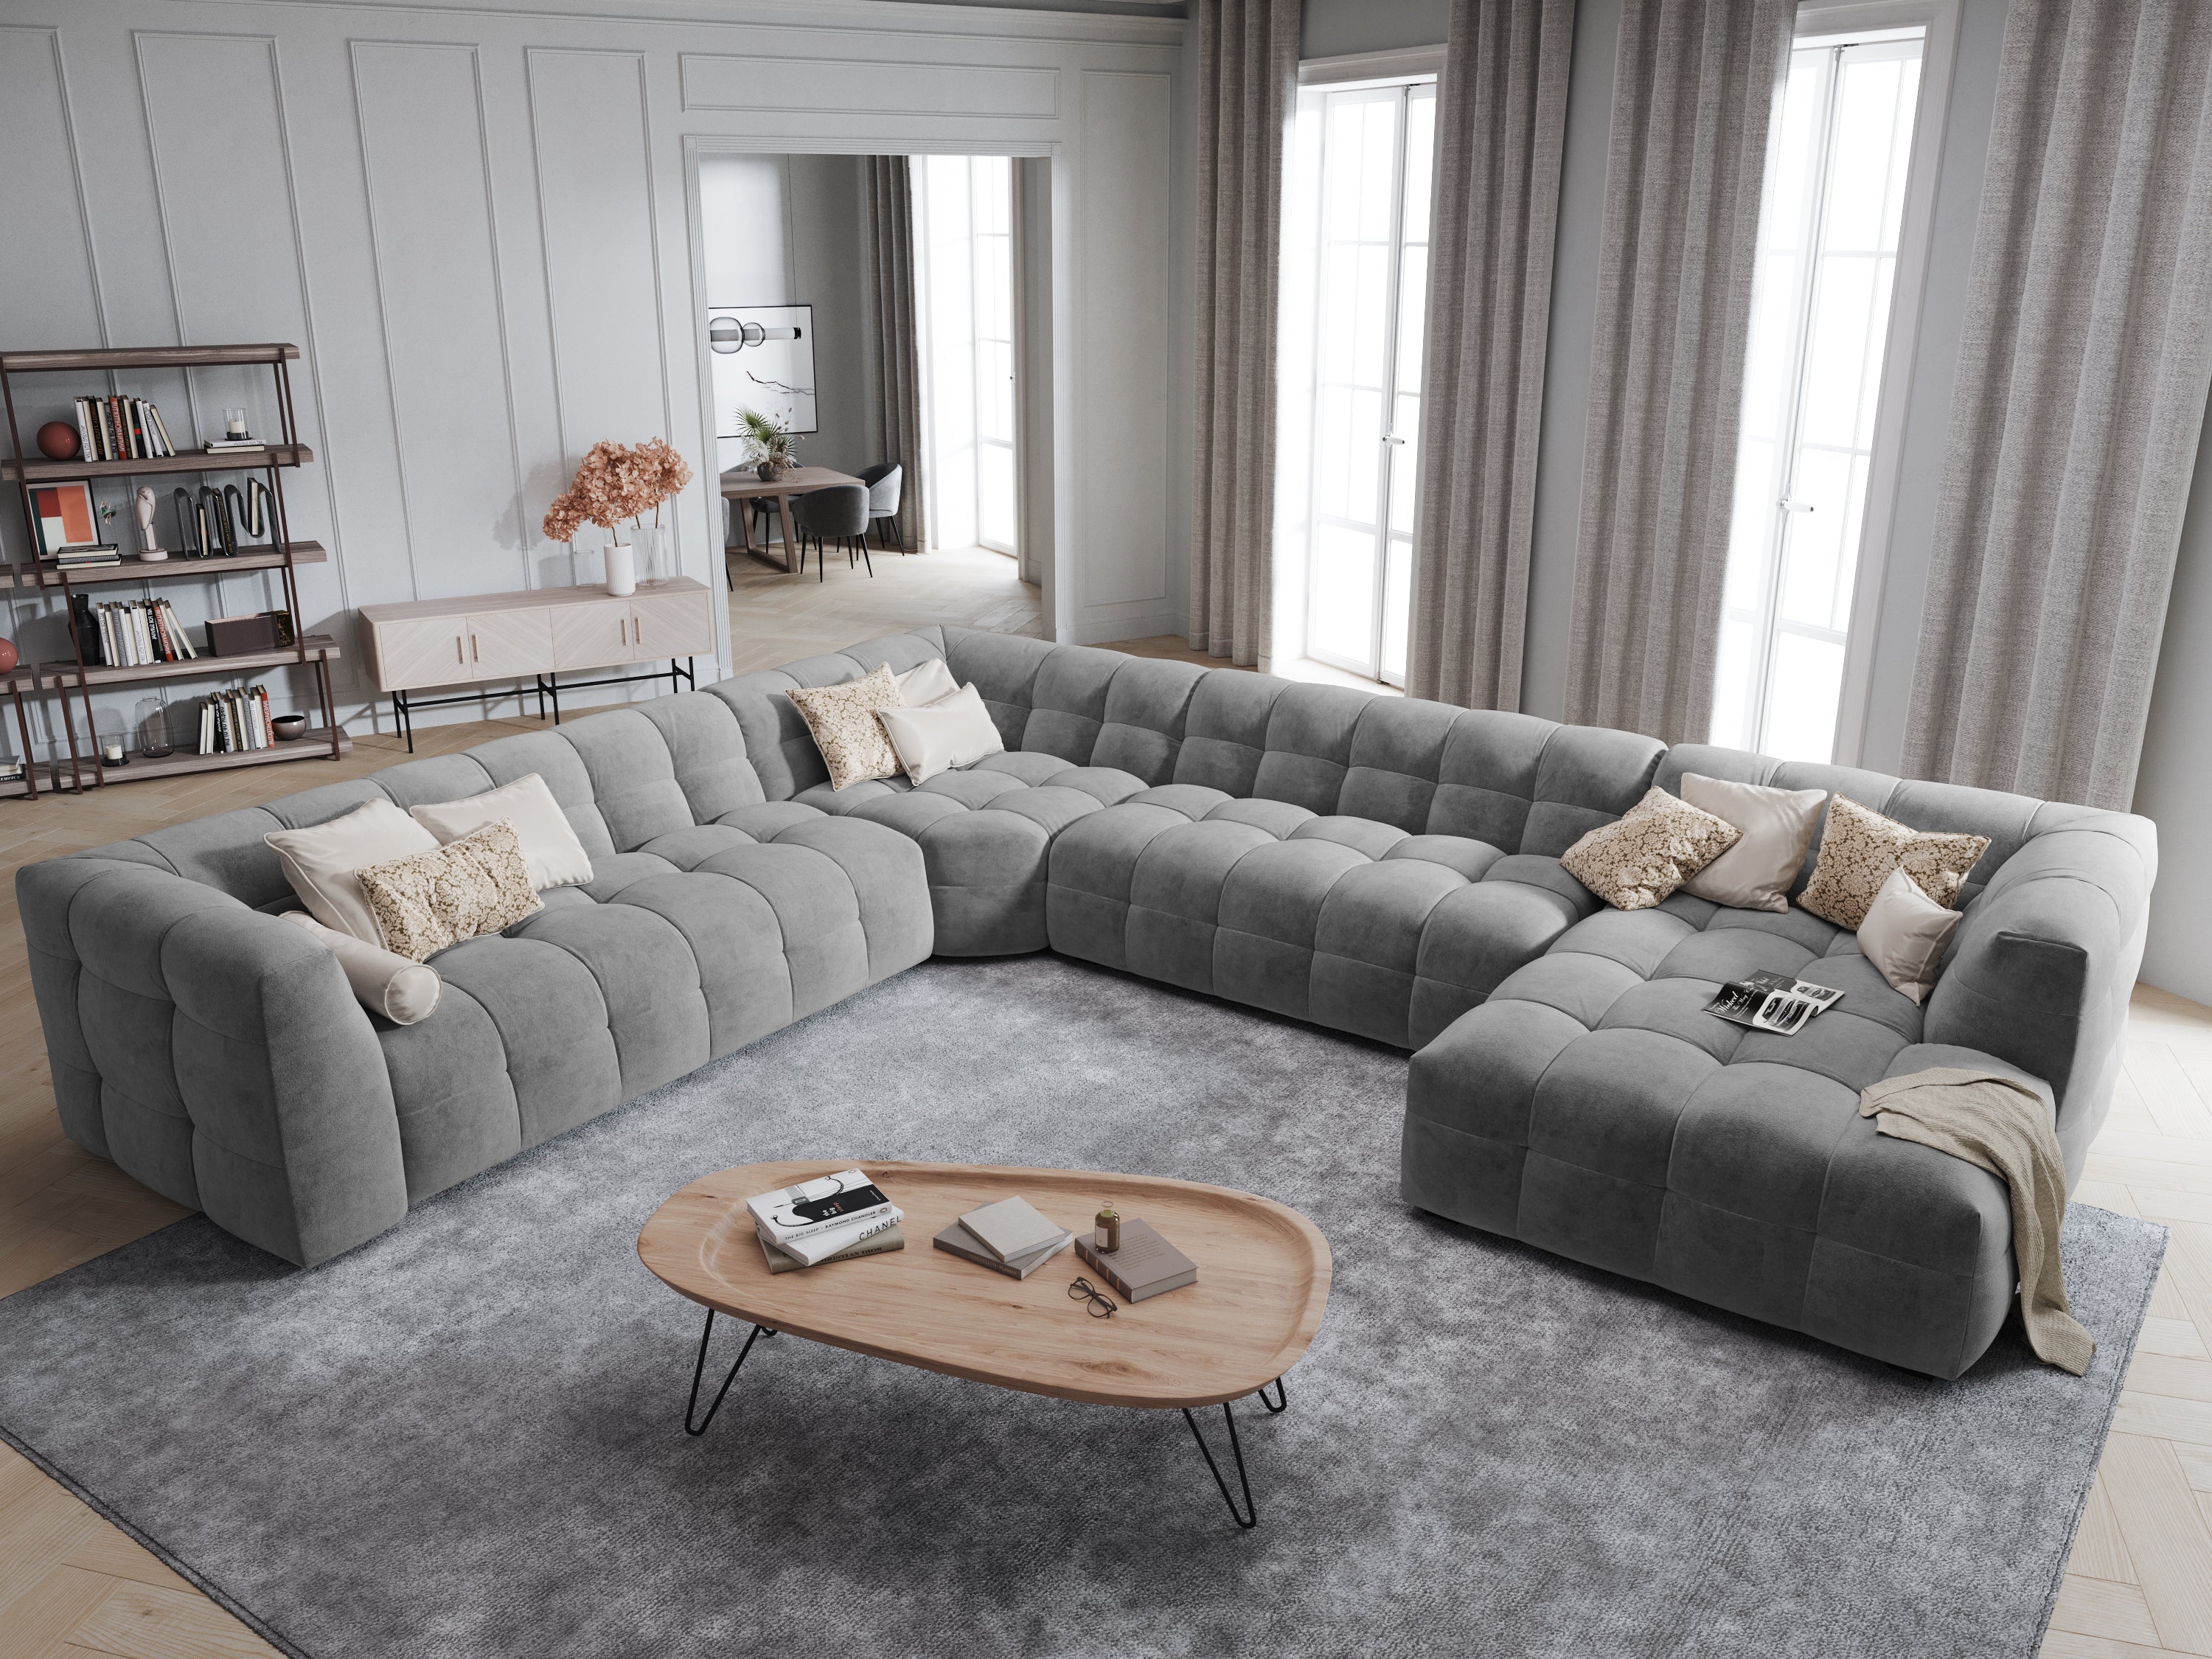 U-shaped corner sofa velvet left VESTA grey